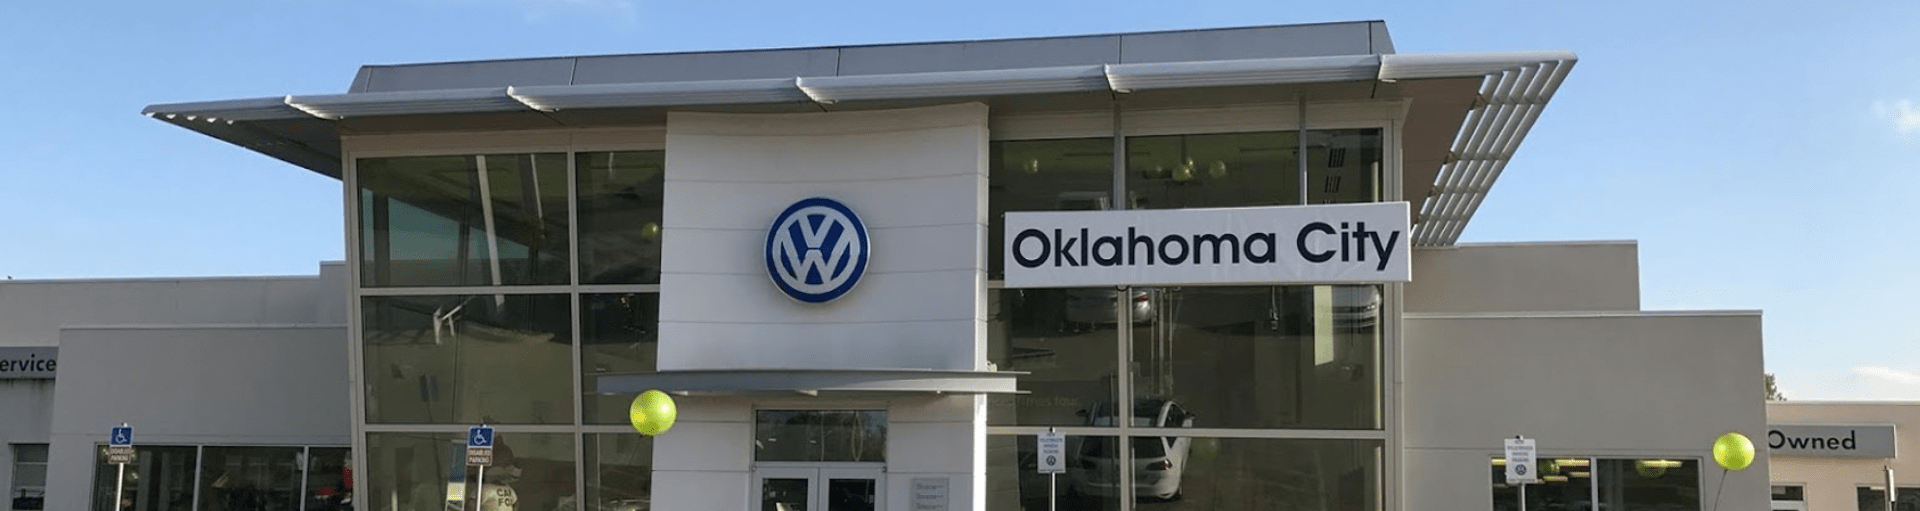 Oklahoma City Volkswagen Brake Pad Replacement Service